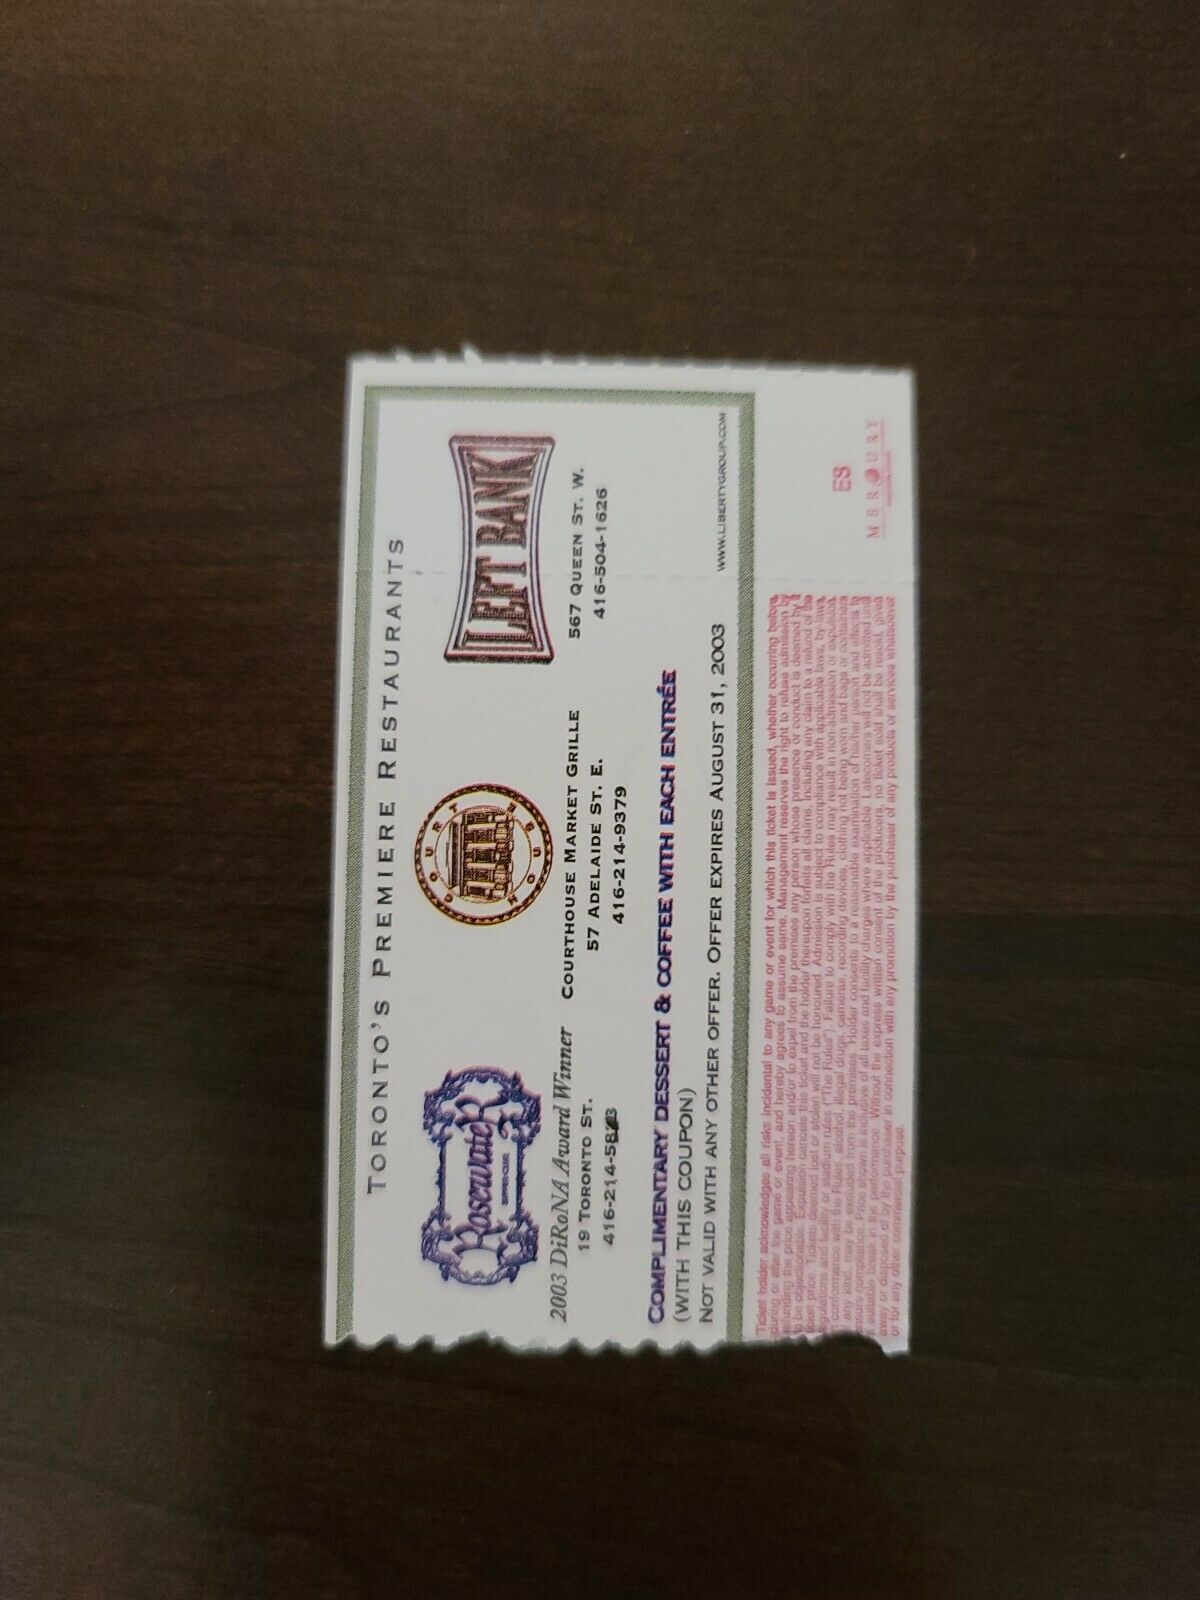 Mudvayne 2003, Toronto Kool Haus Original Concert Ticket Stub